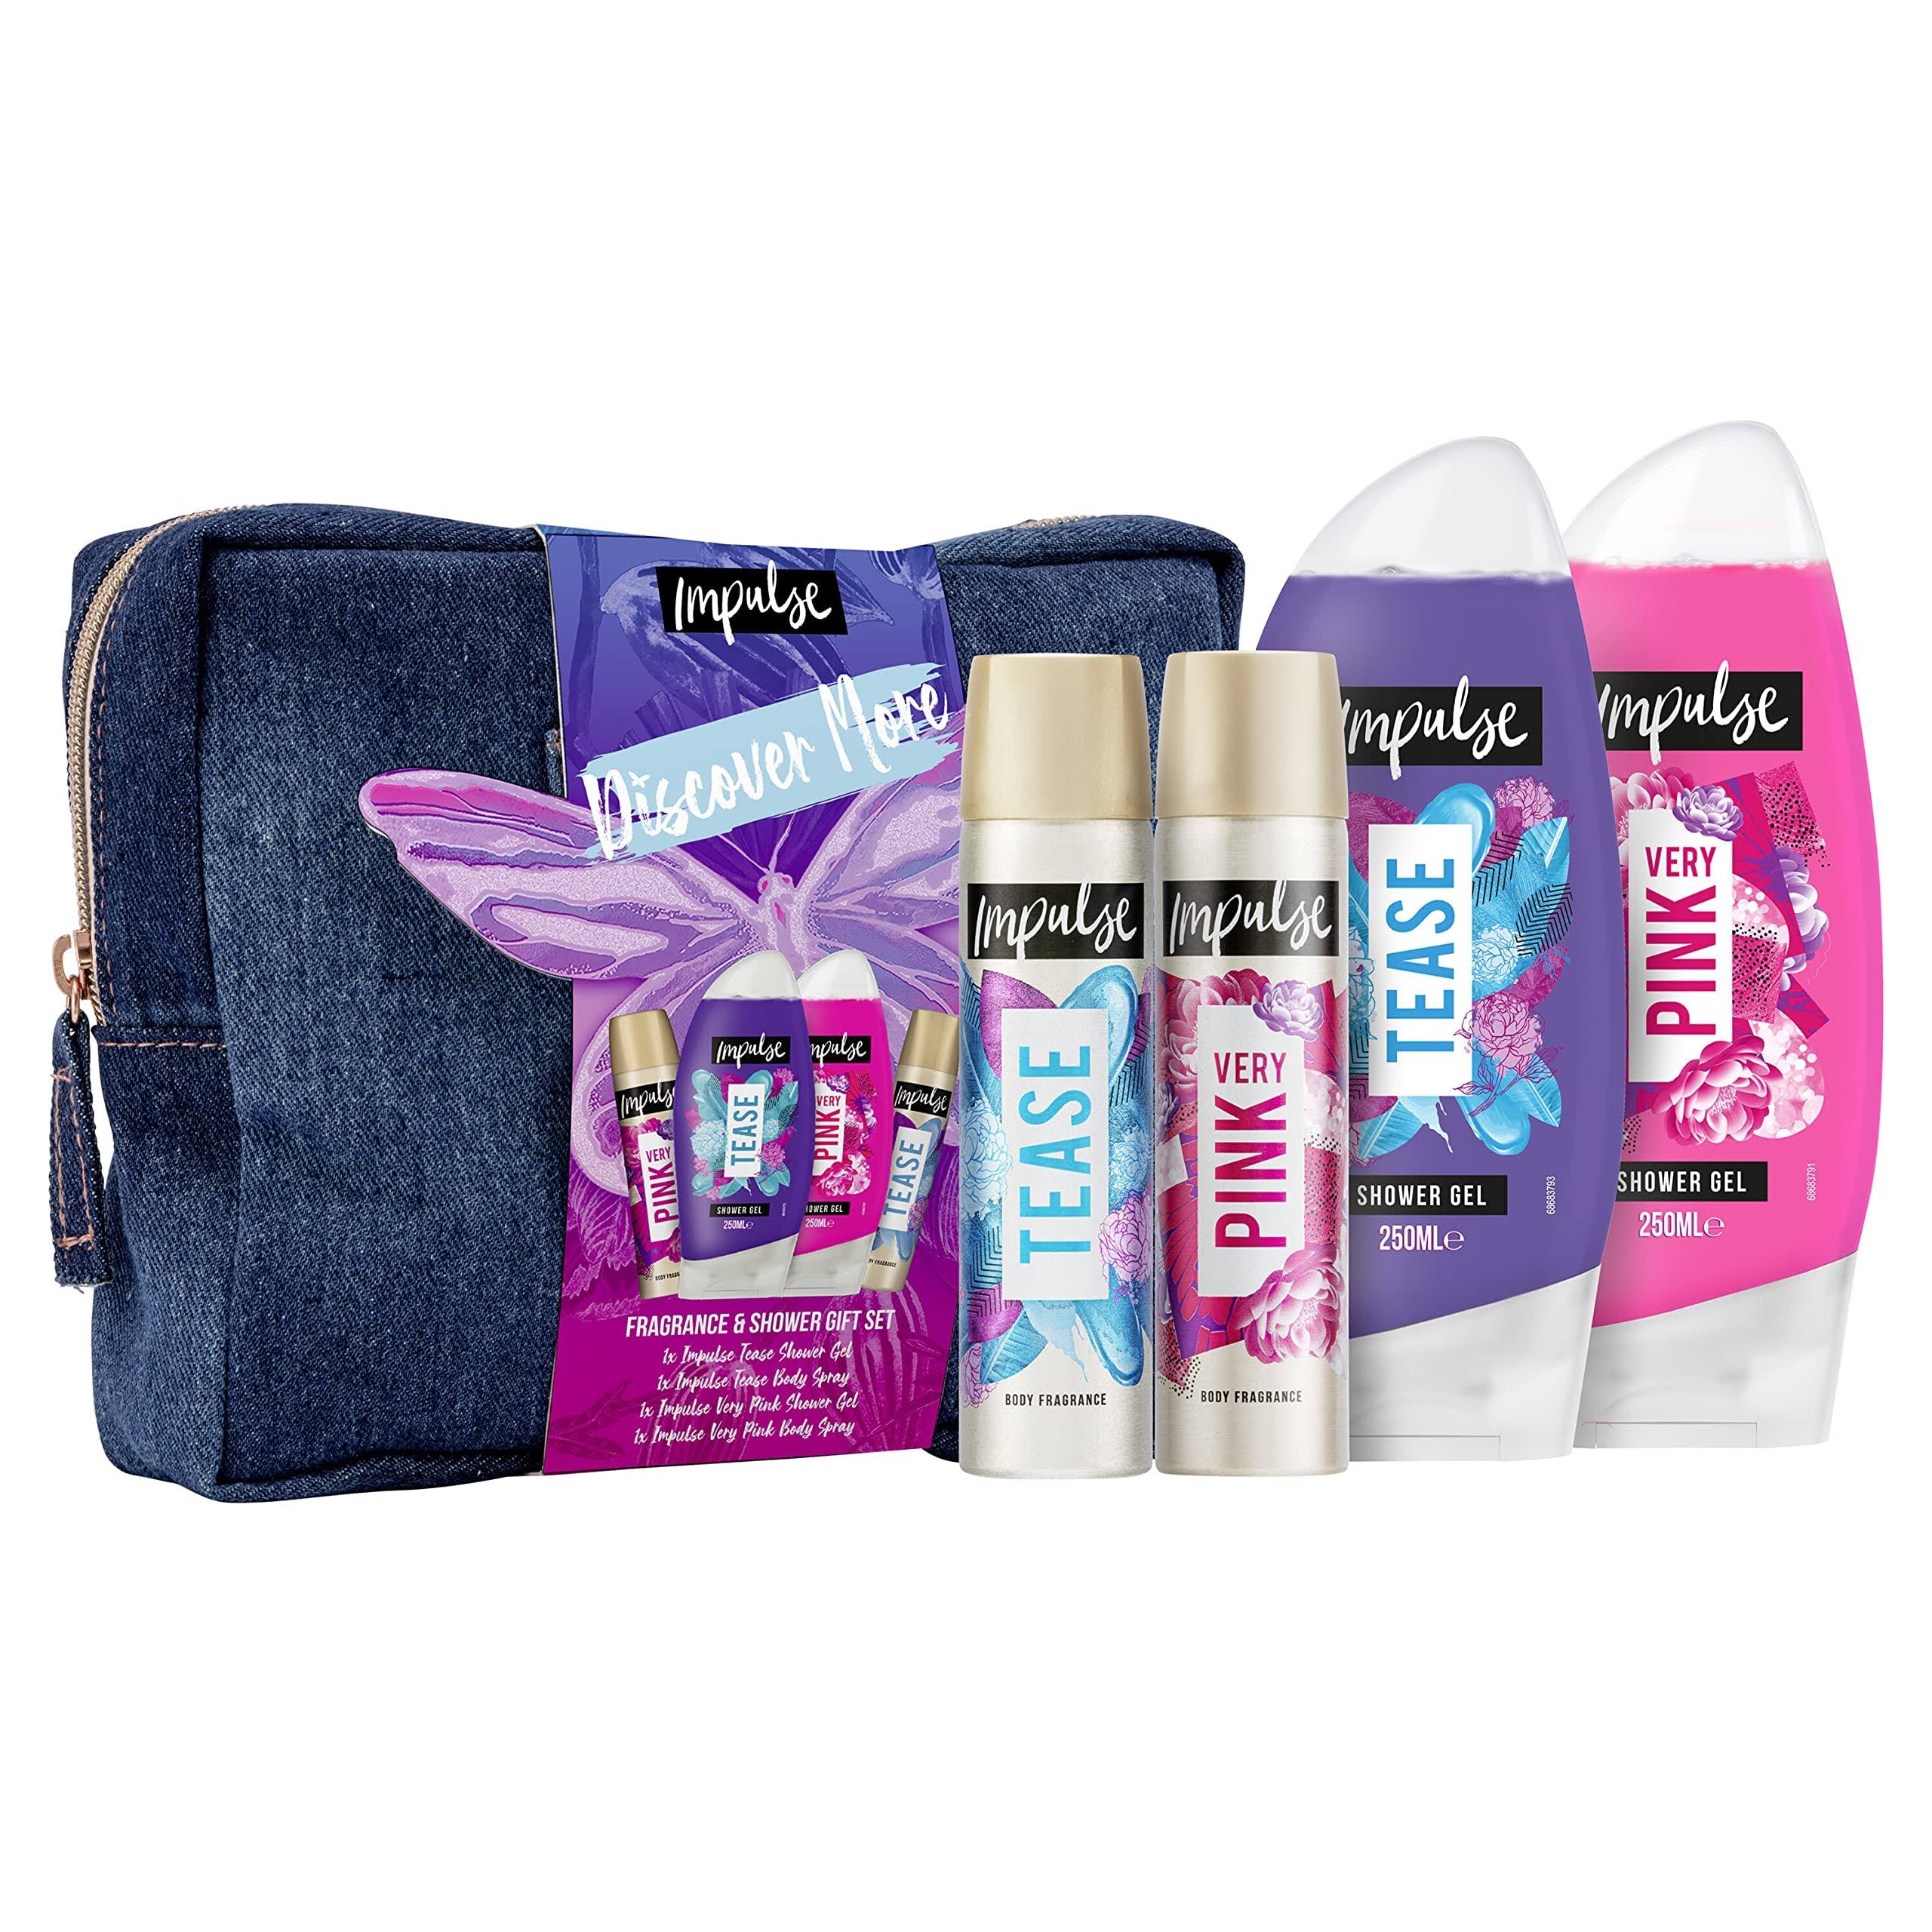 Impulse Discover More Body Fragrance & Shower Gel Gift Set